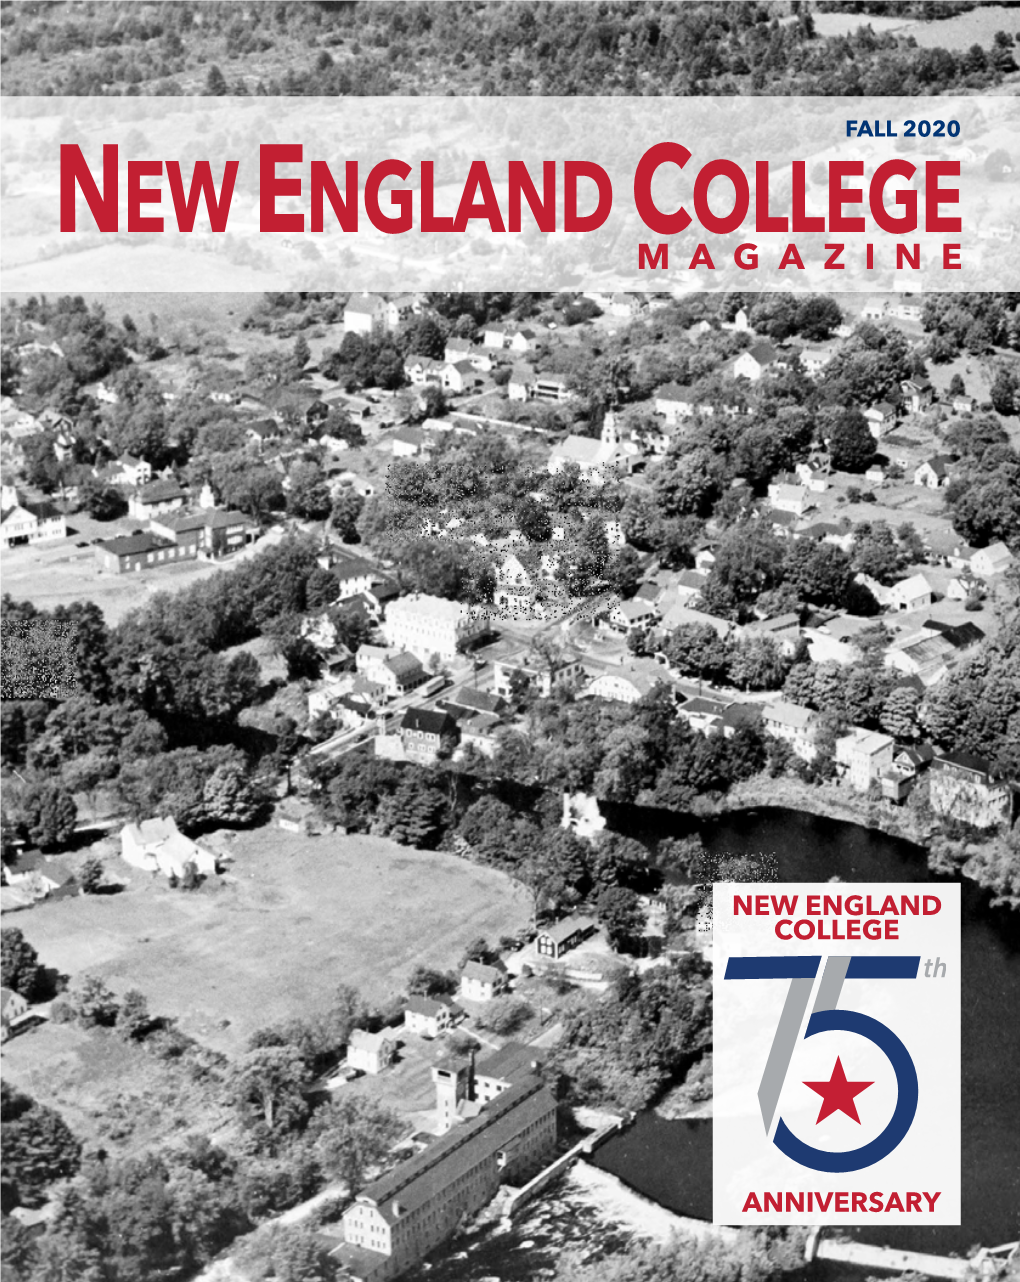 New England College